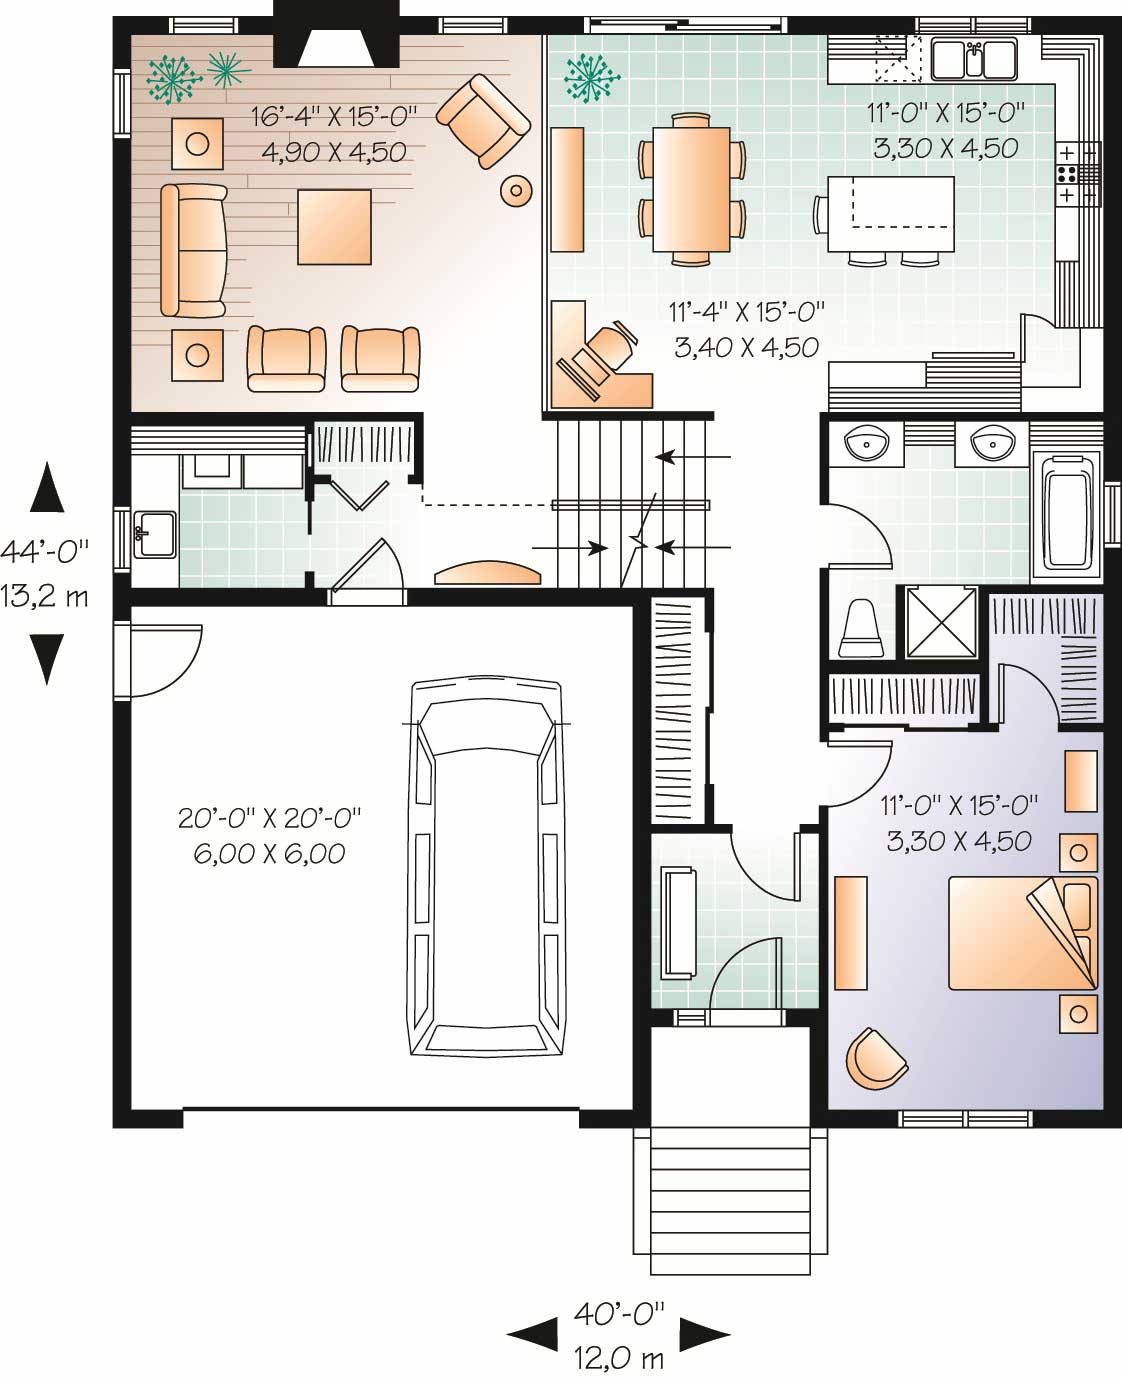 SplitLevel House Plans Home Design 3468